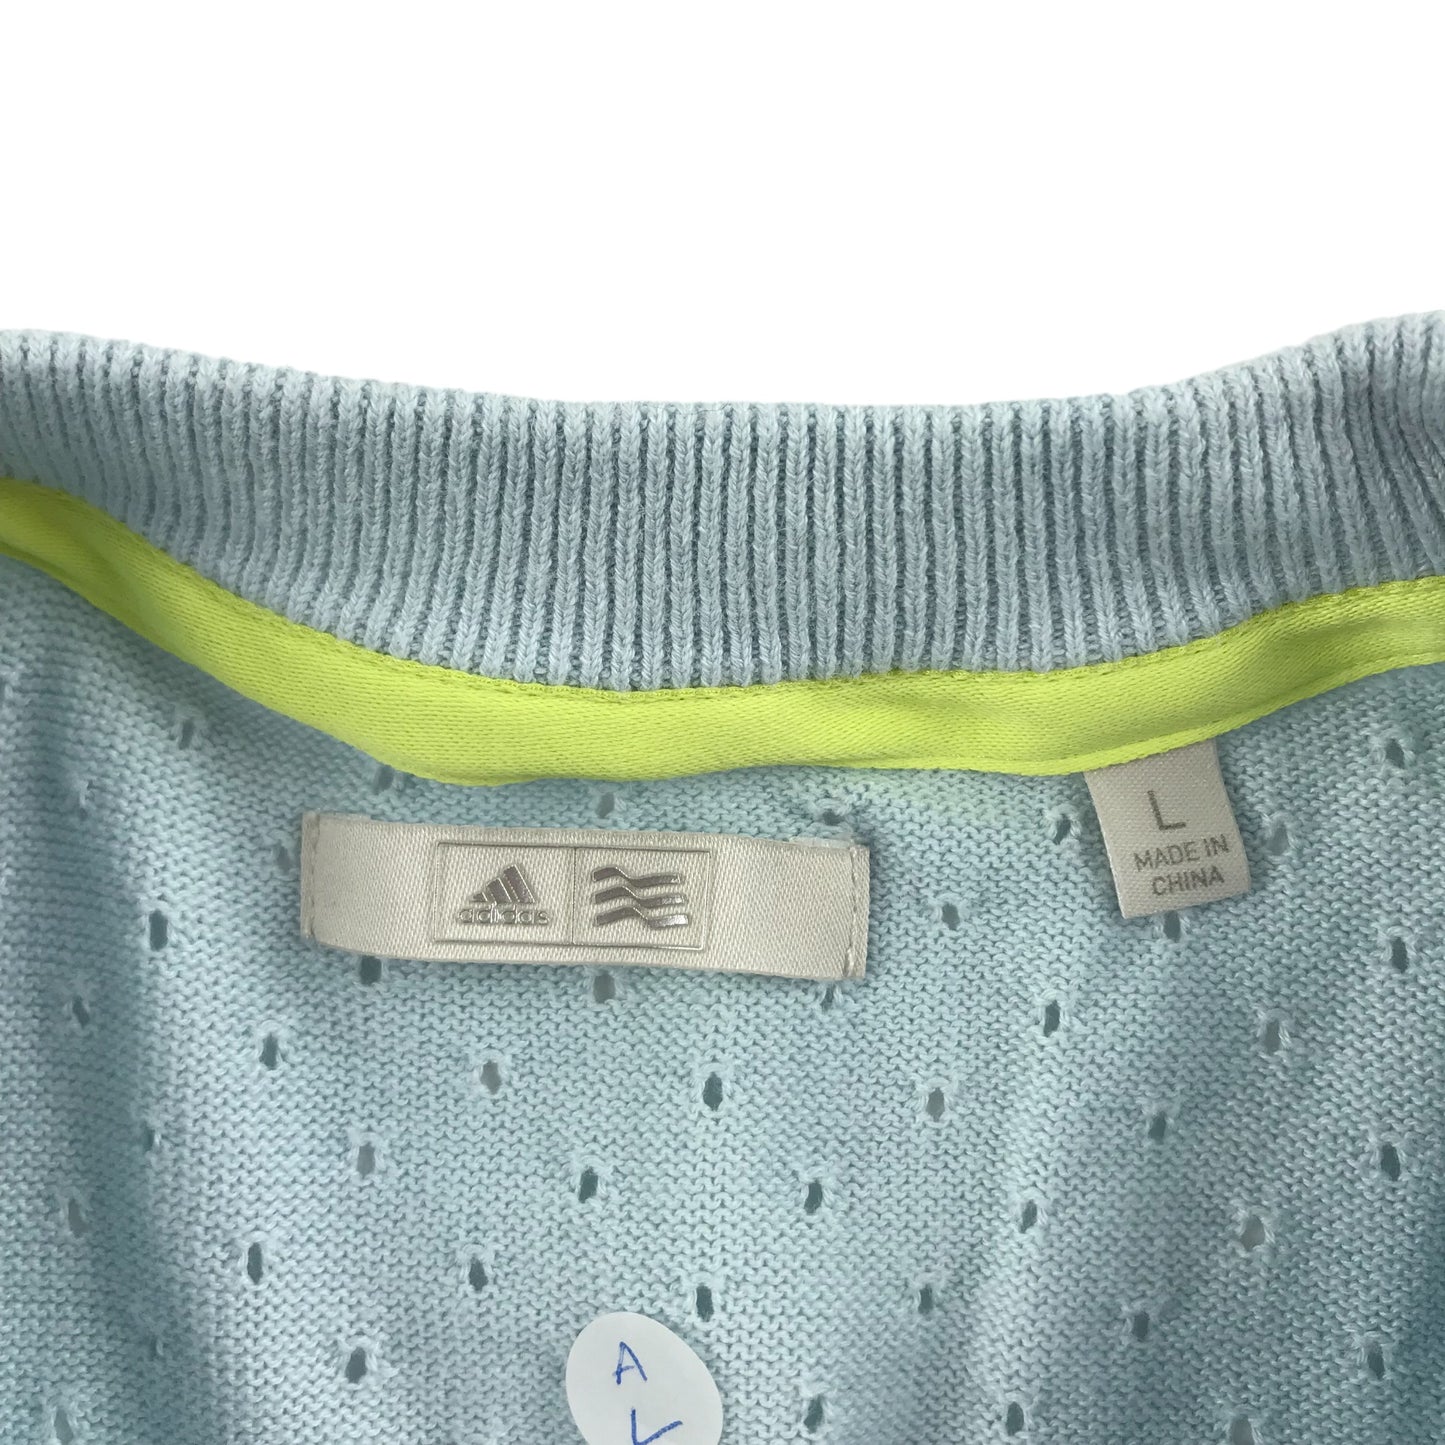 Adidas Scottish Golf Jumper Women size Large Light Blue Long Sleeve Knitted